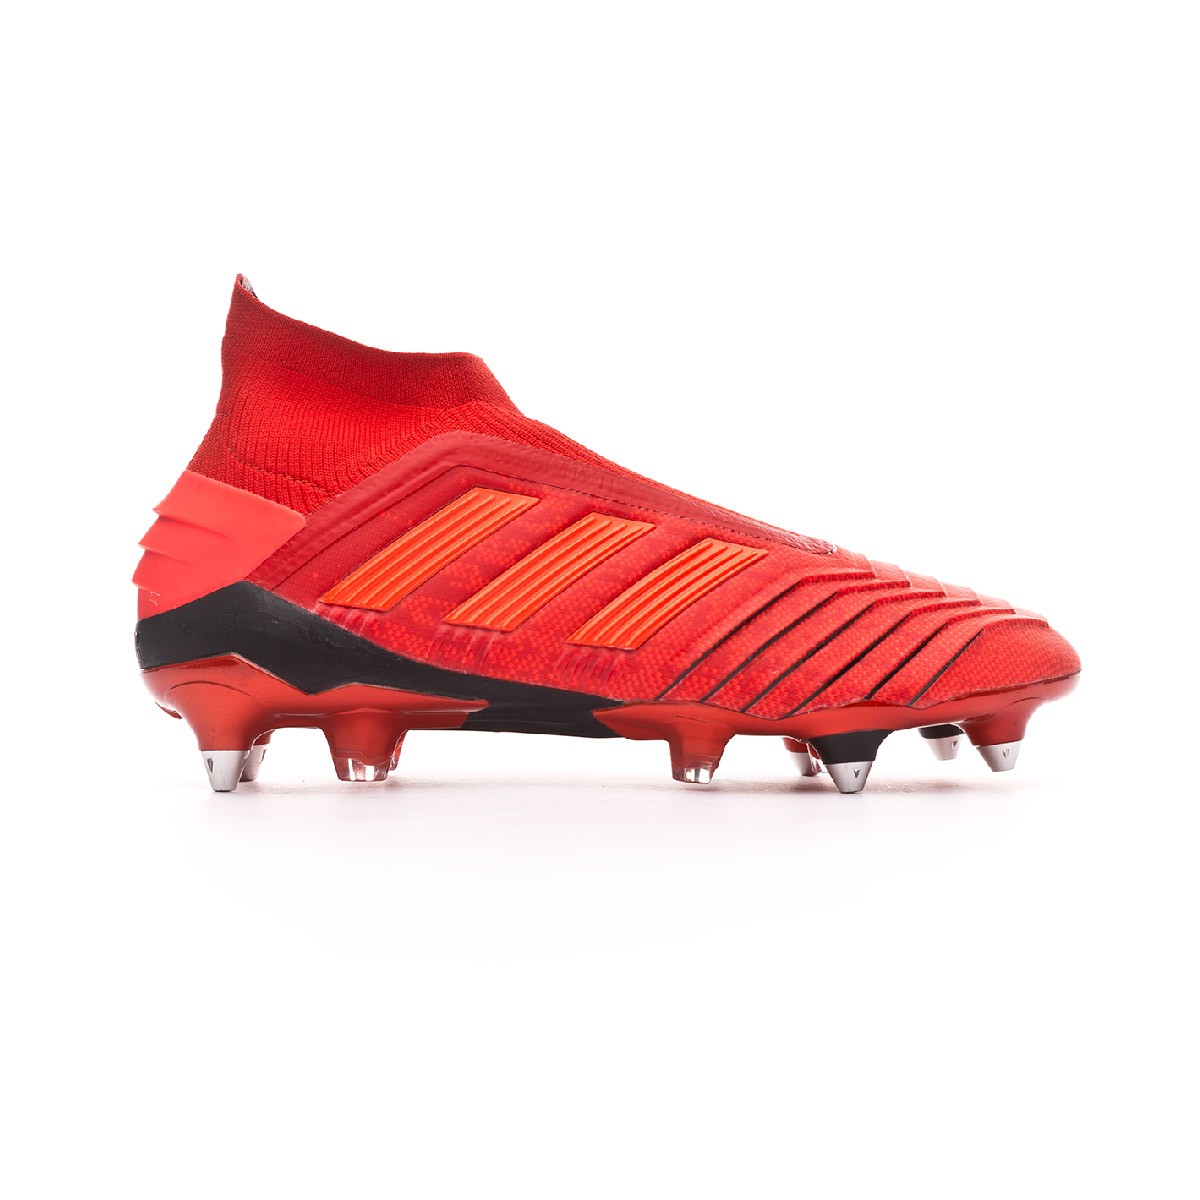 adidas predator football boots size 4